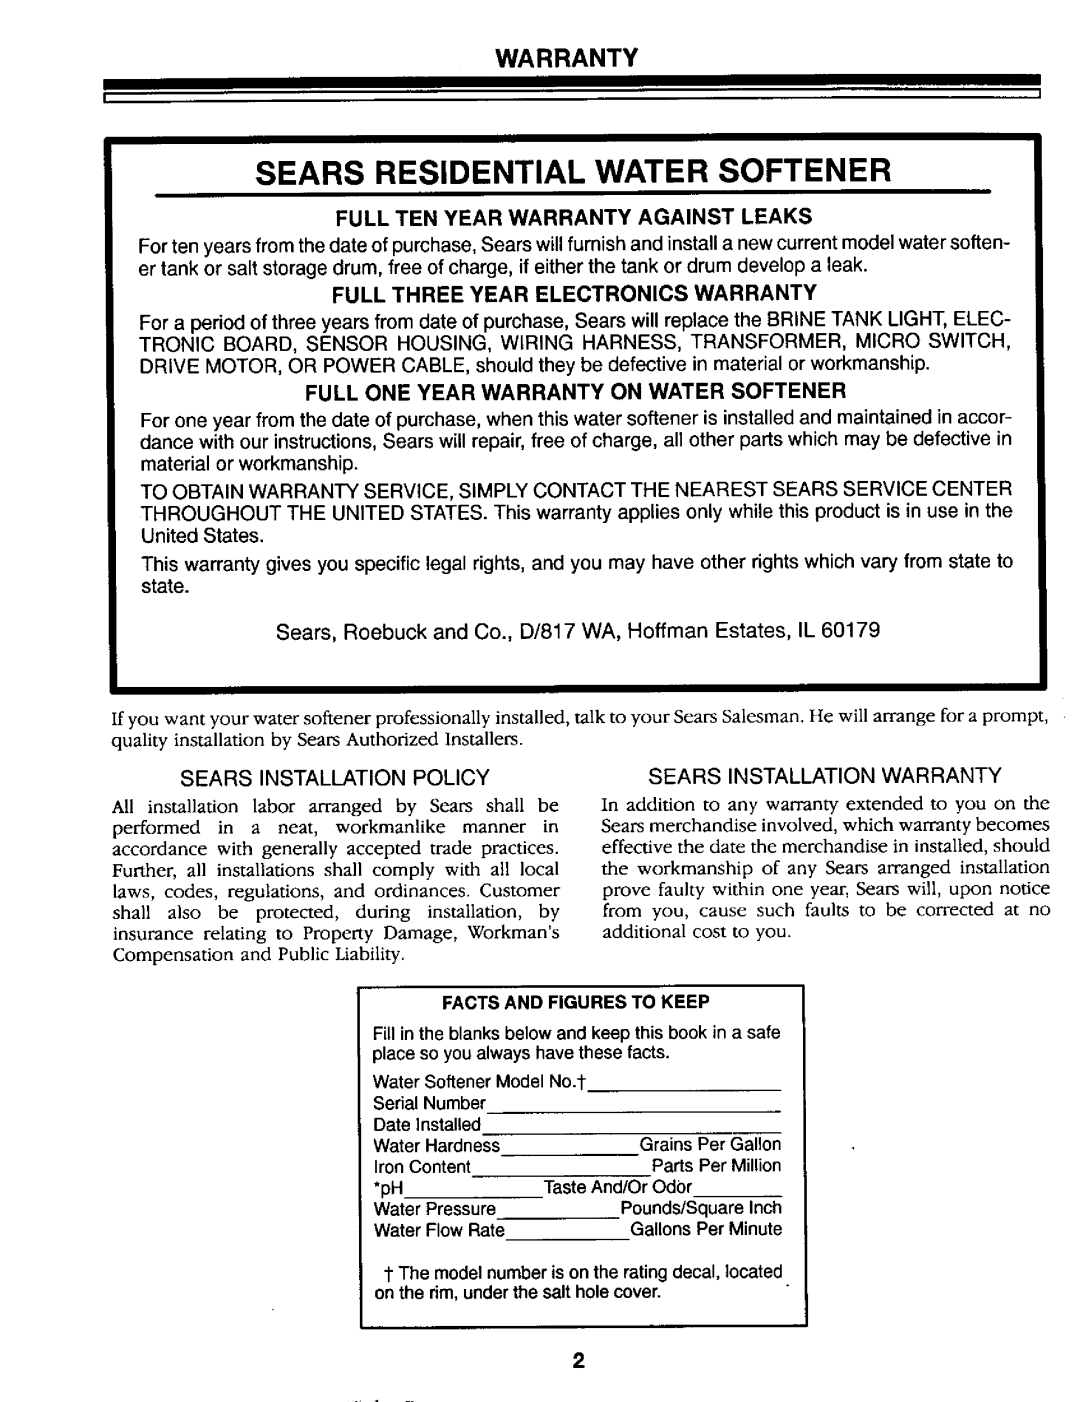 Kenmore 625.34867 owner manual Warranty, Sears Residential Water Softener 